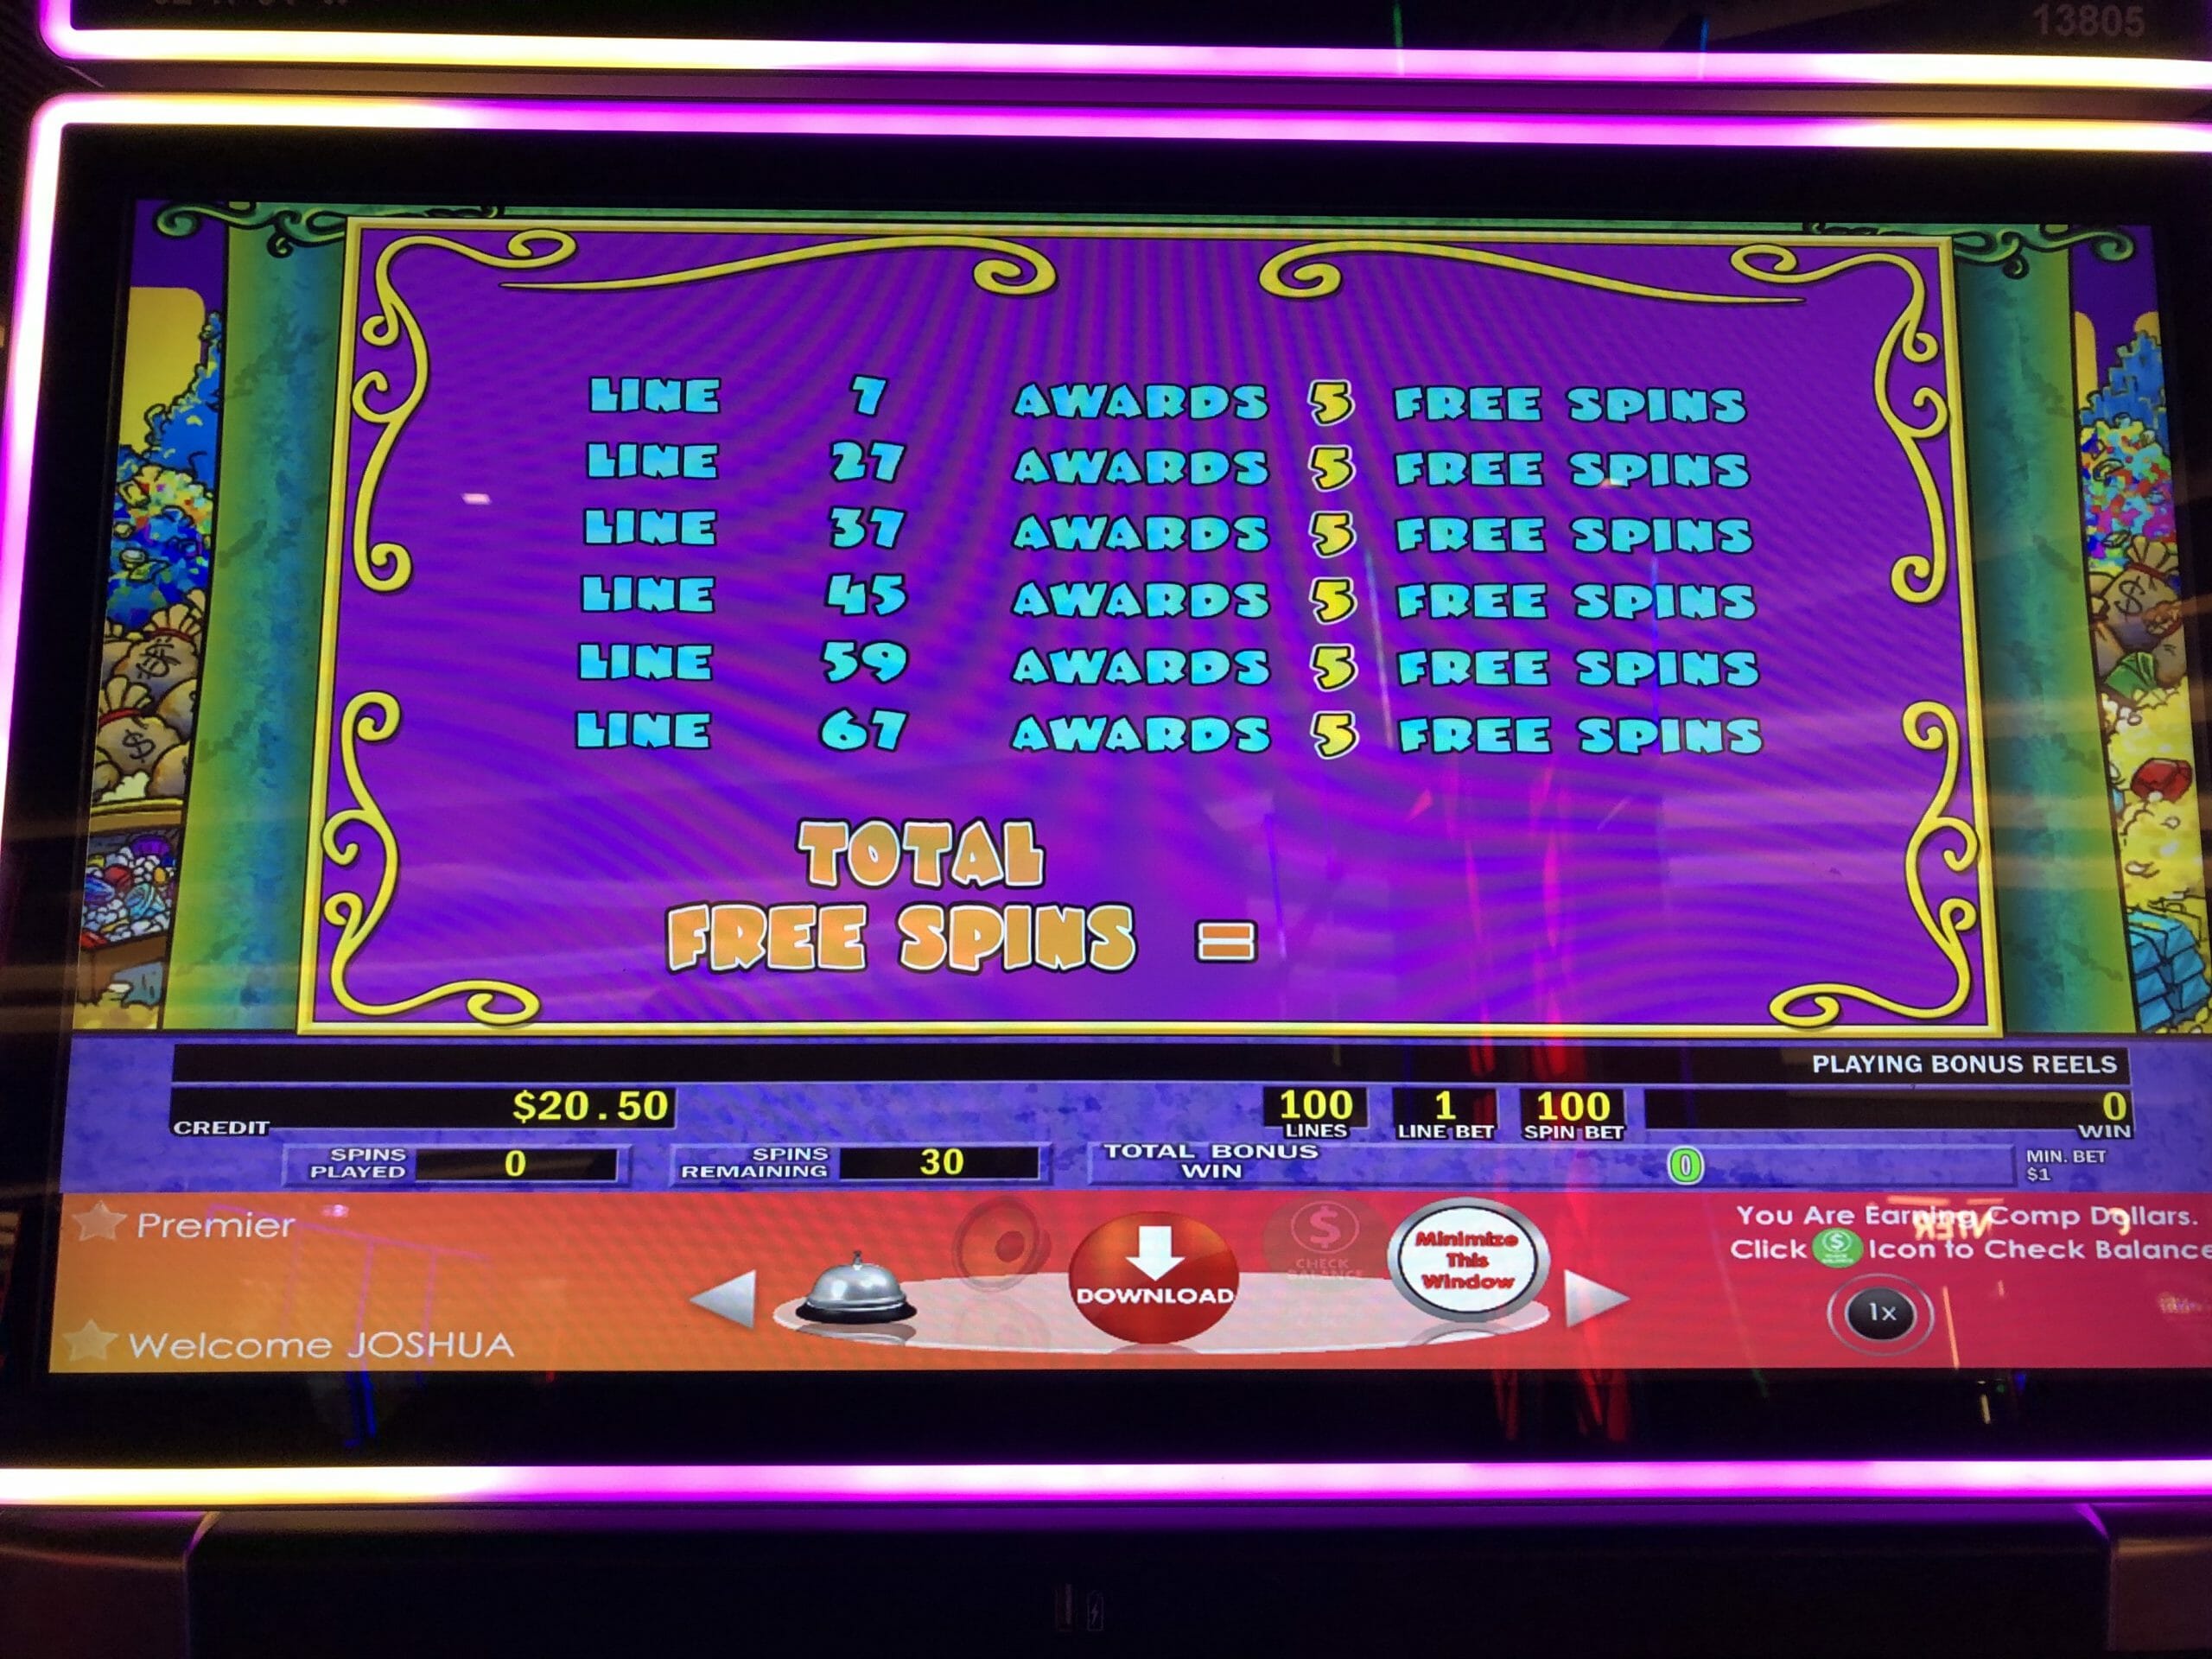 Casino Career Training Inc. - Windsor N9a 6v2, 251 Goyeau St Slot